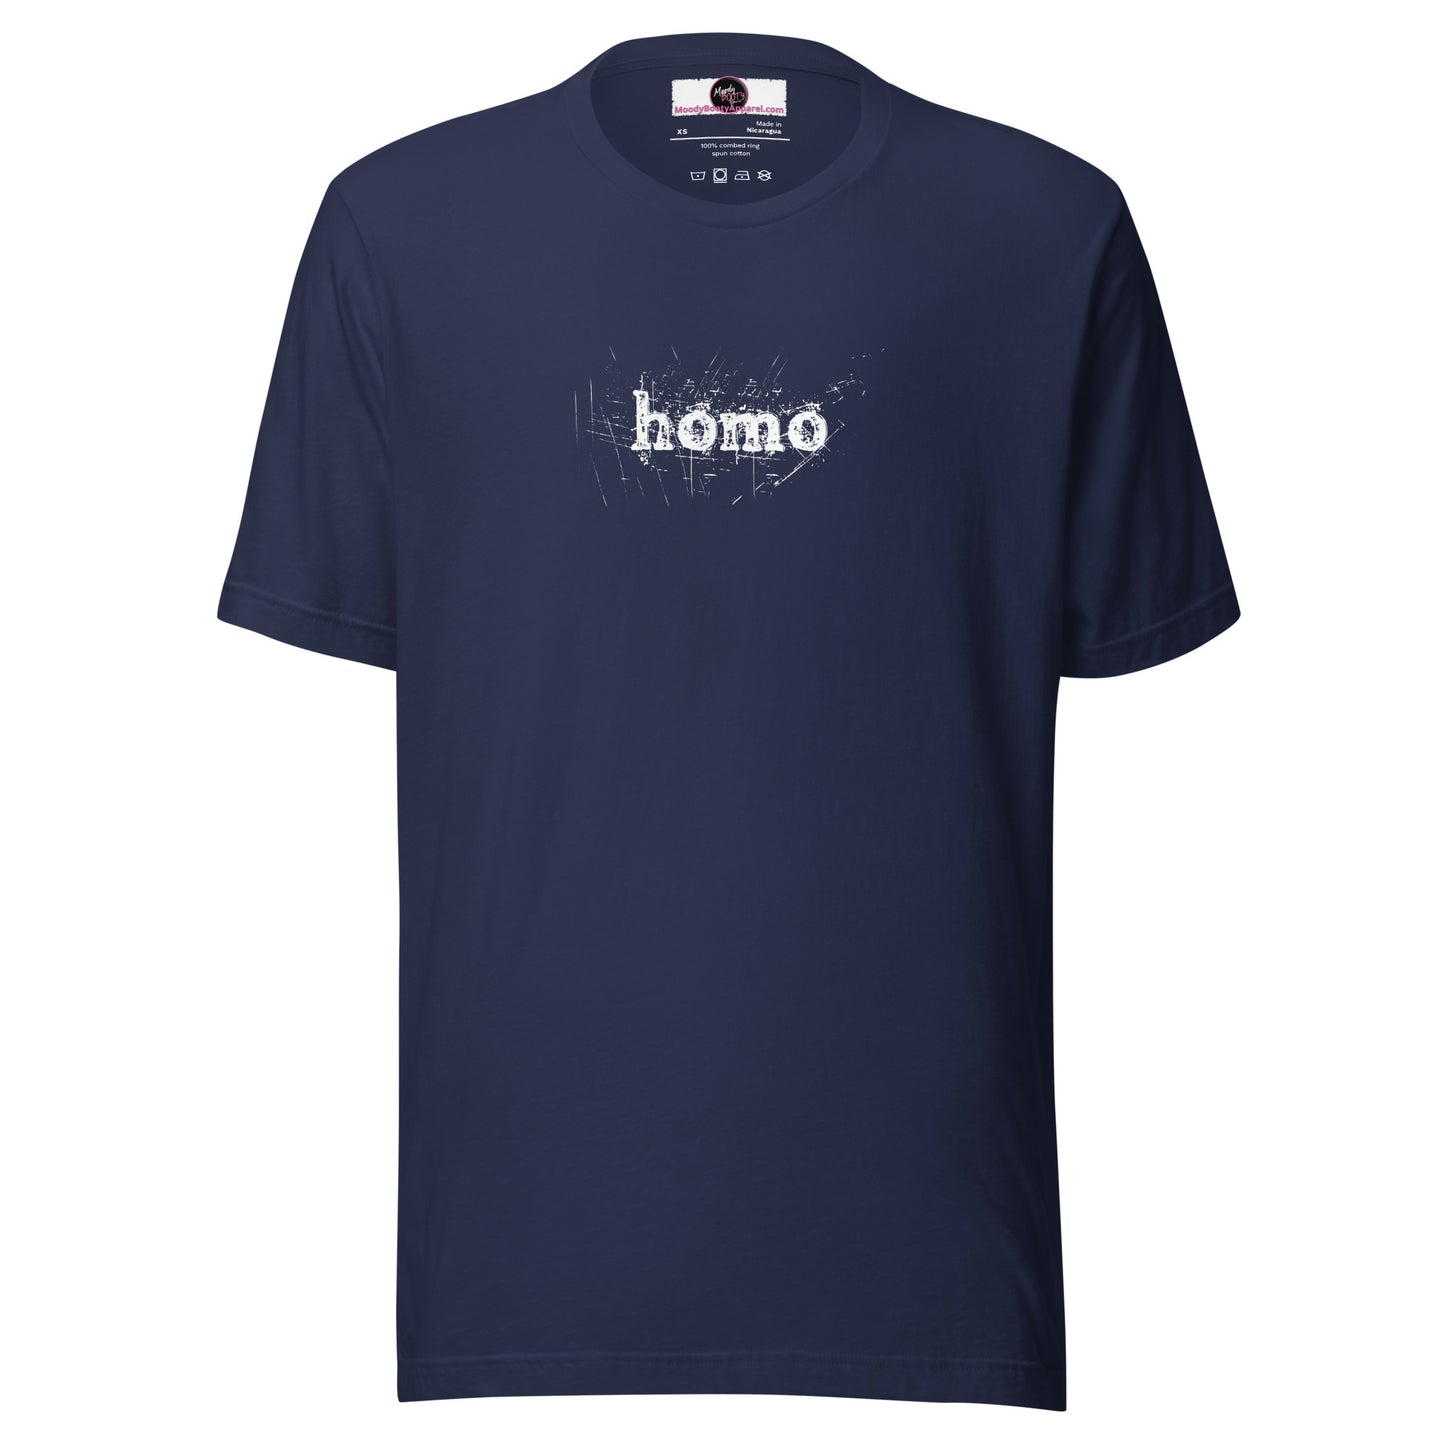 Homo - Unisex t-shirt